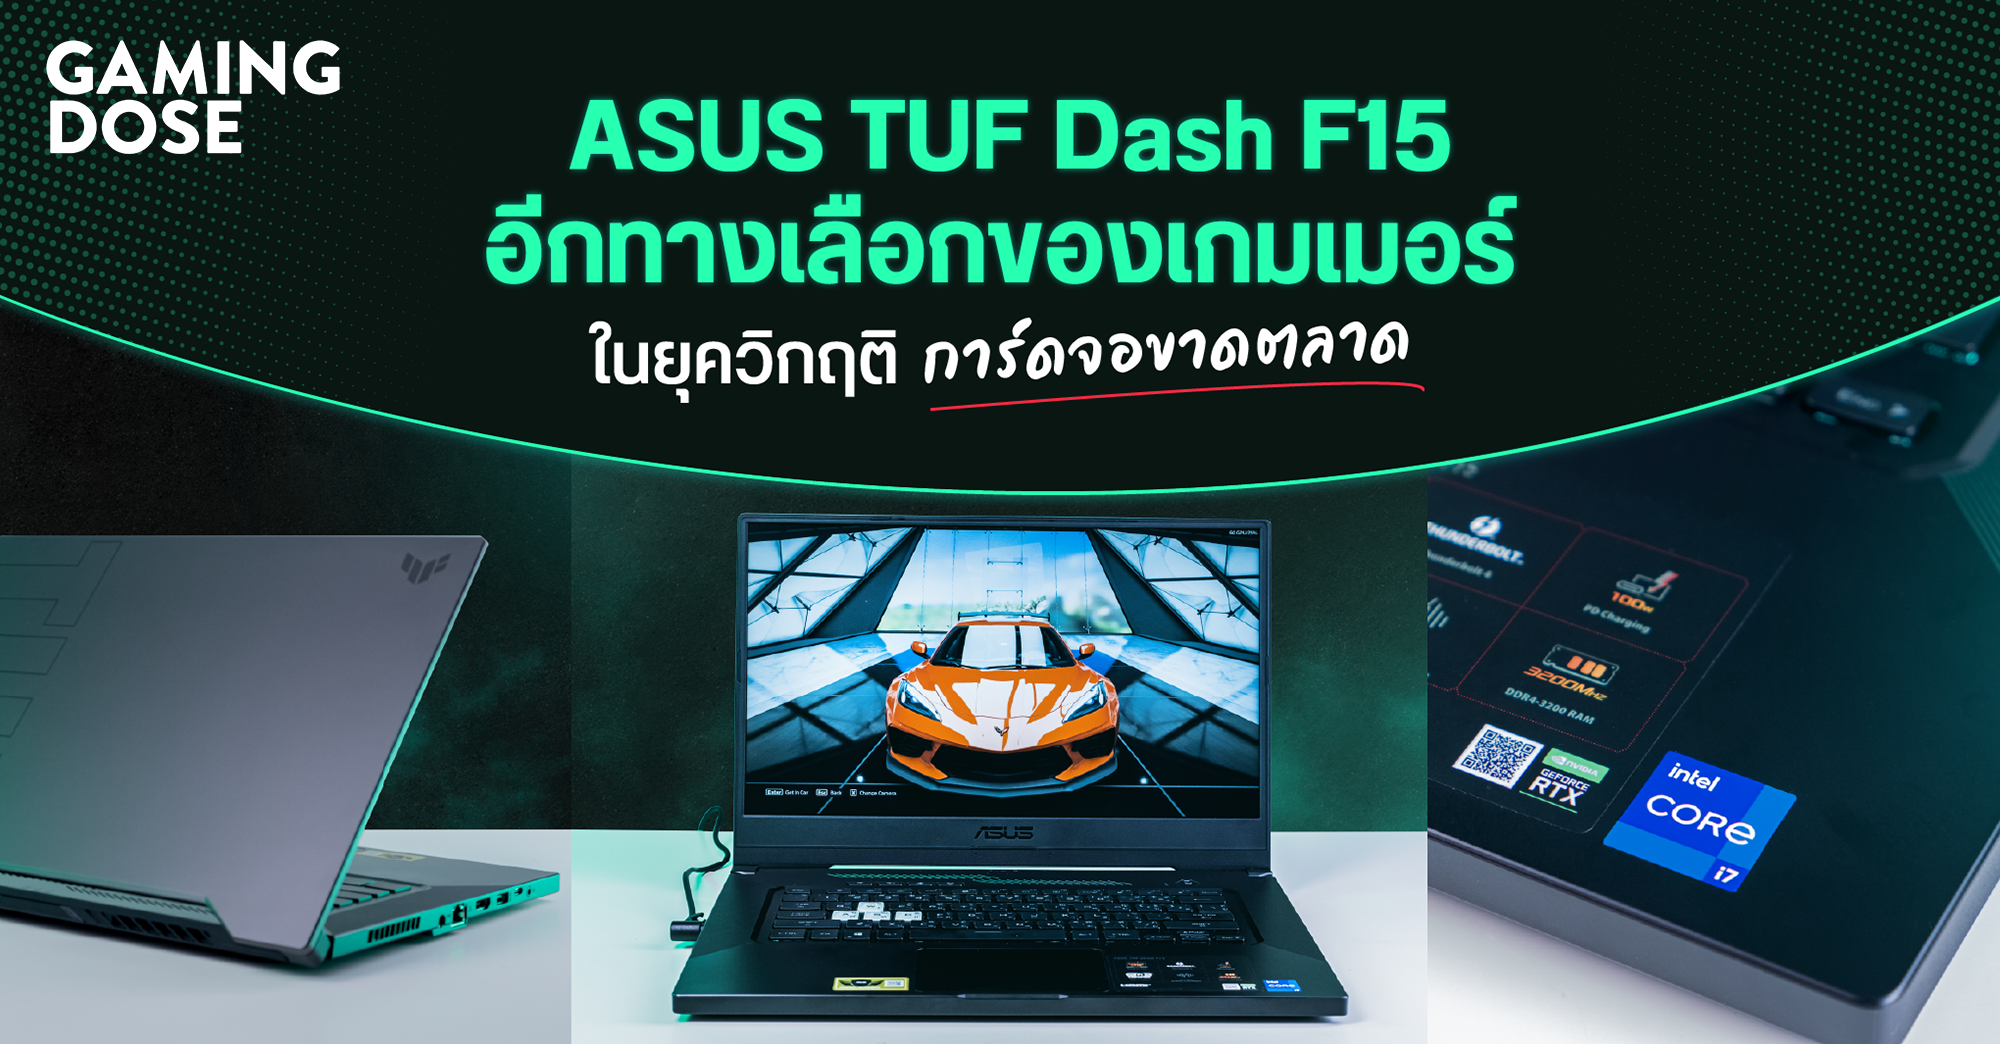 ASUS TUF Dash F15 - อีกทางเลือกของเกมเมอร์ ในยุควิกฤติการ์ดจอขาดตลาด